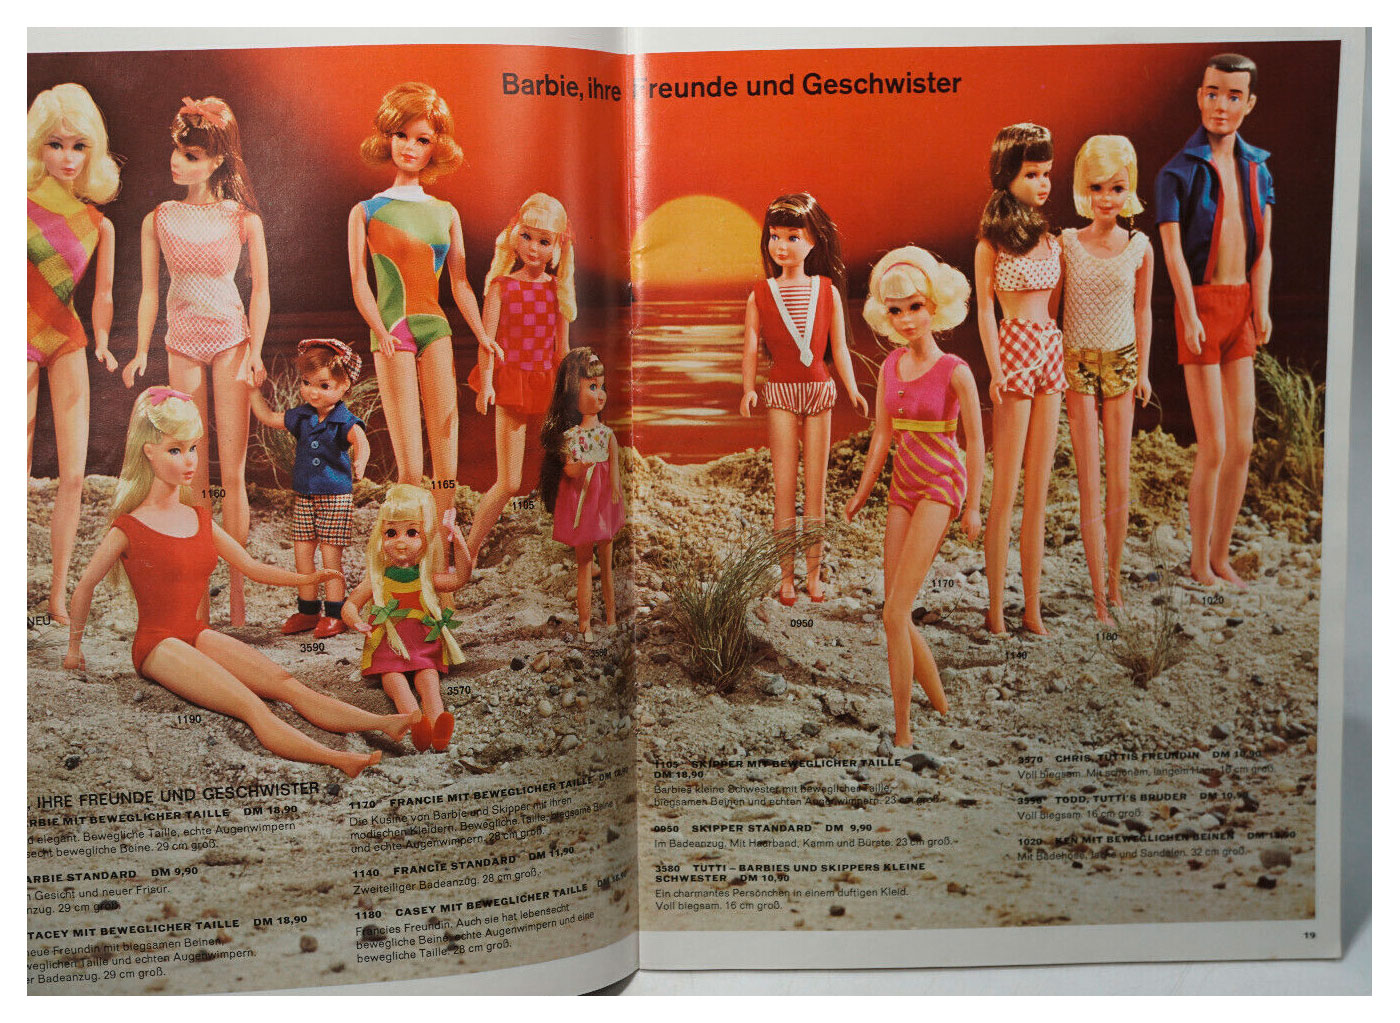 From 1969 German Mattel Spielzeug catalogue